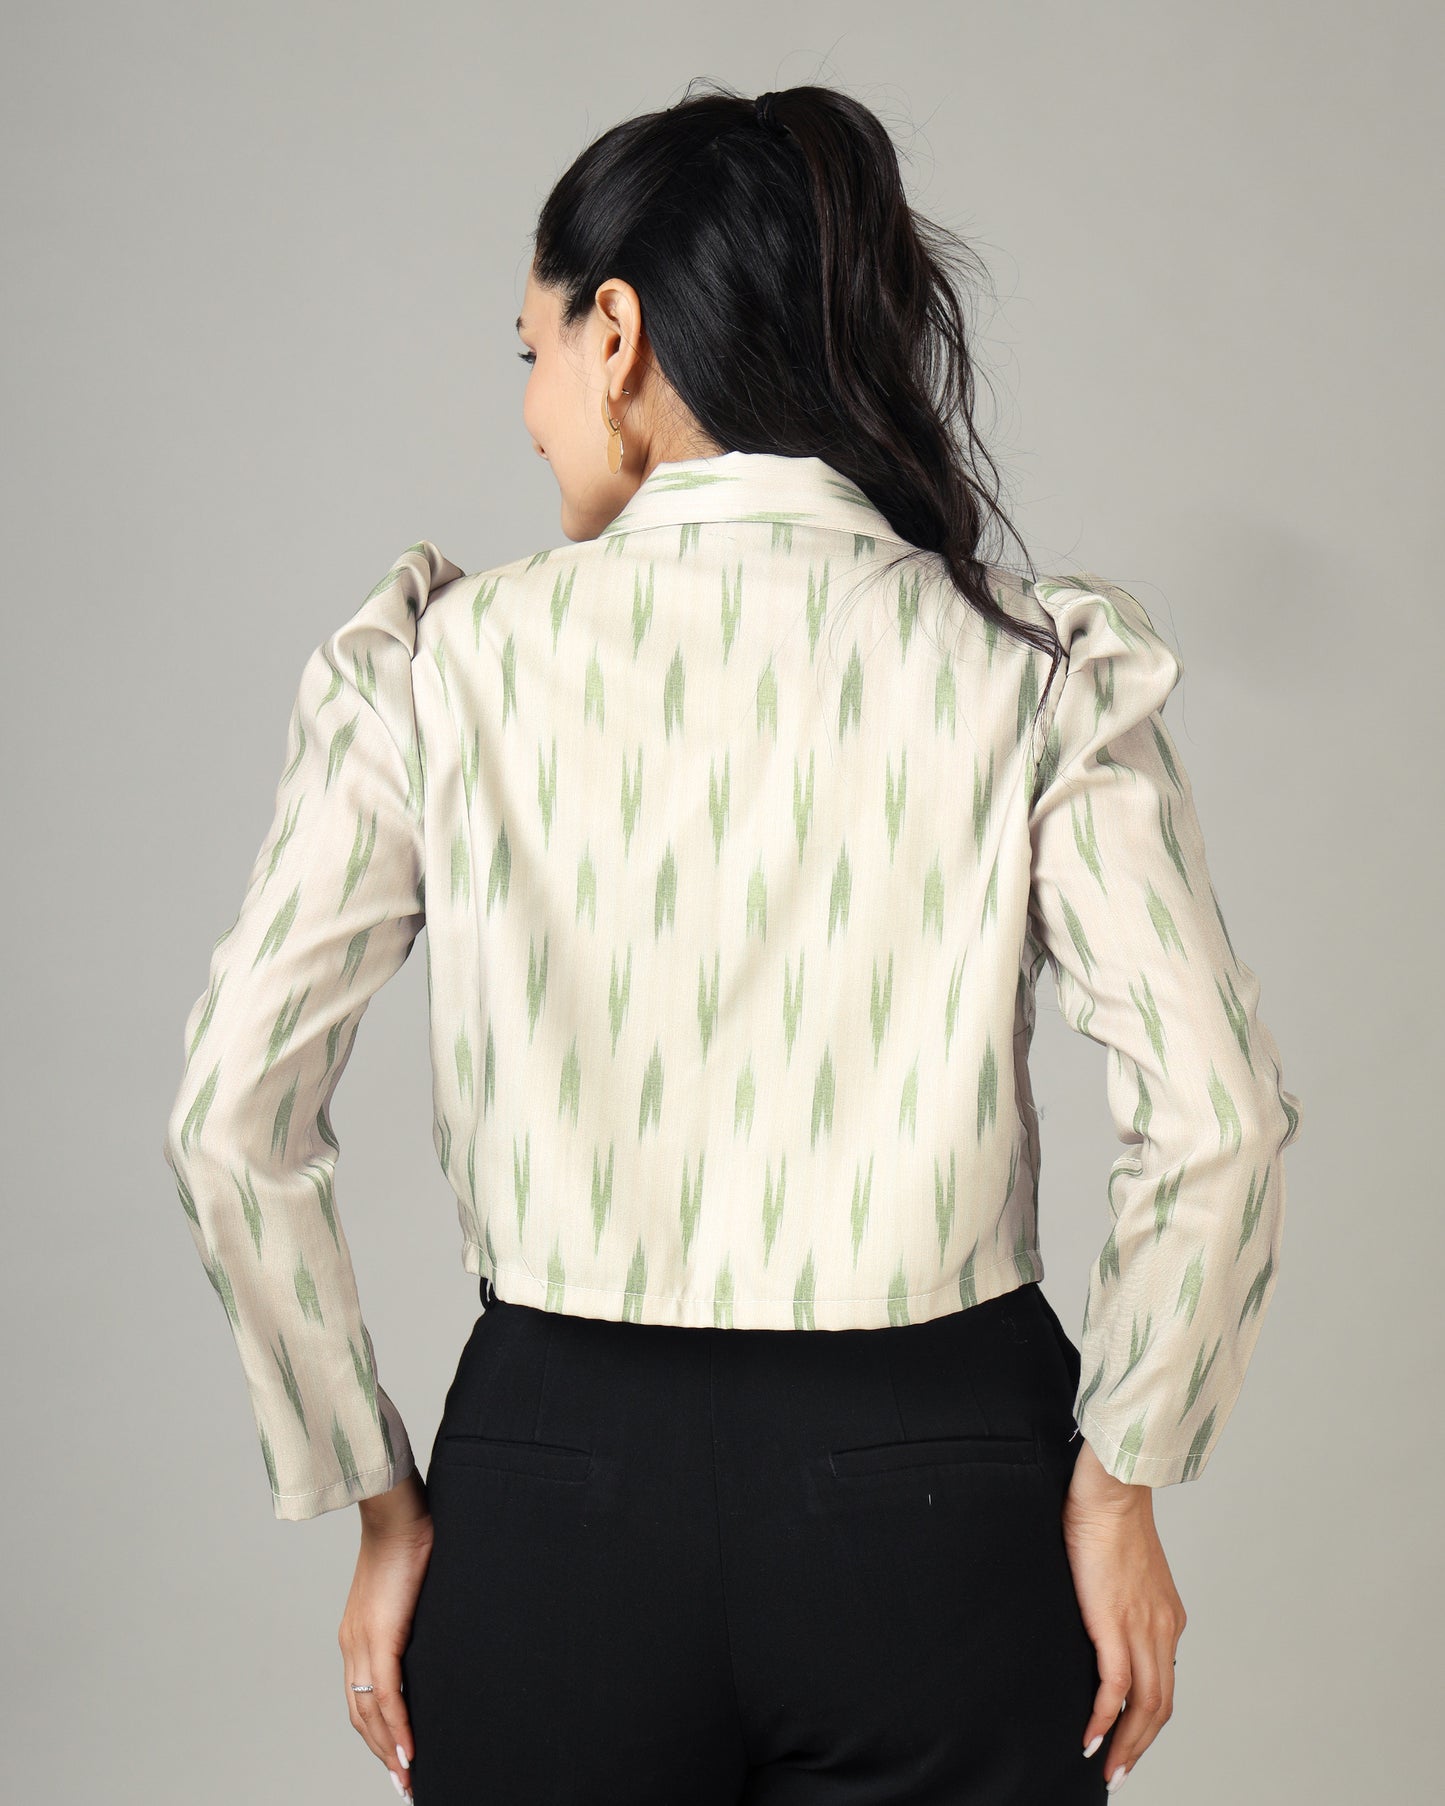 Unveil Artistry in Our Ikat Pattern Women's Crop Jacket